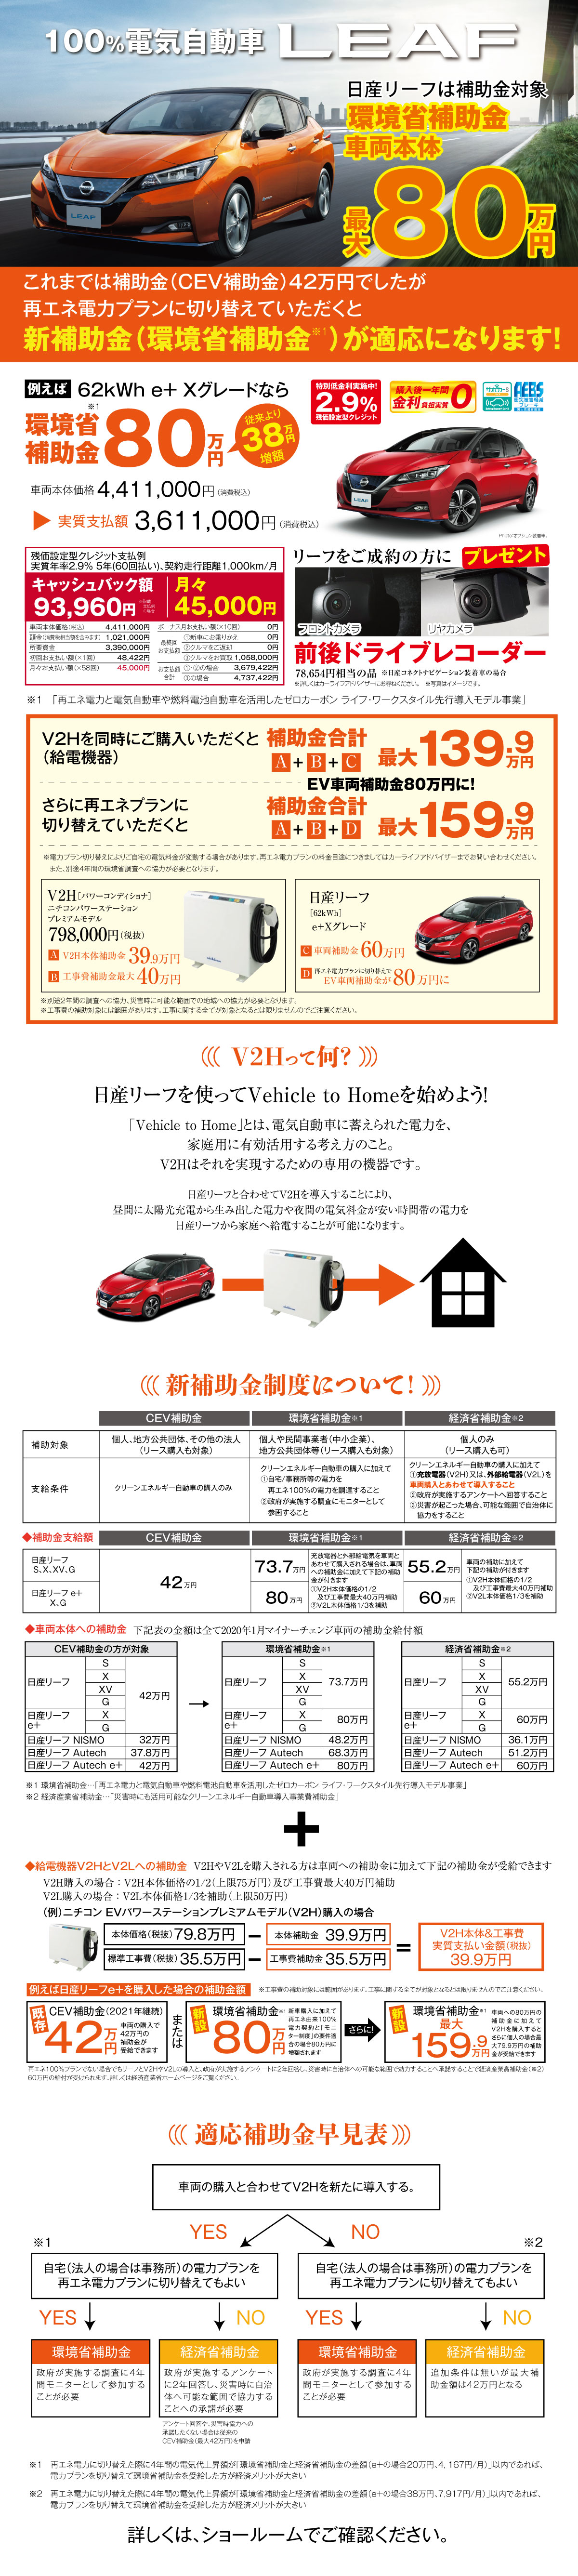 茨城日産自動車株式会社 リーフは補助金対象最大80万円